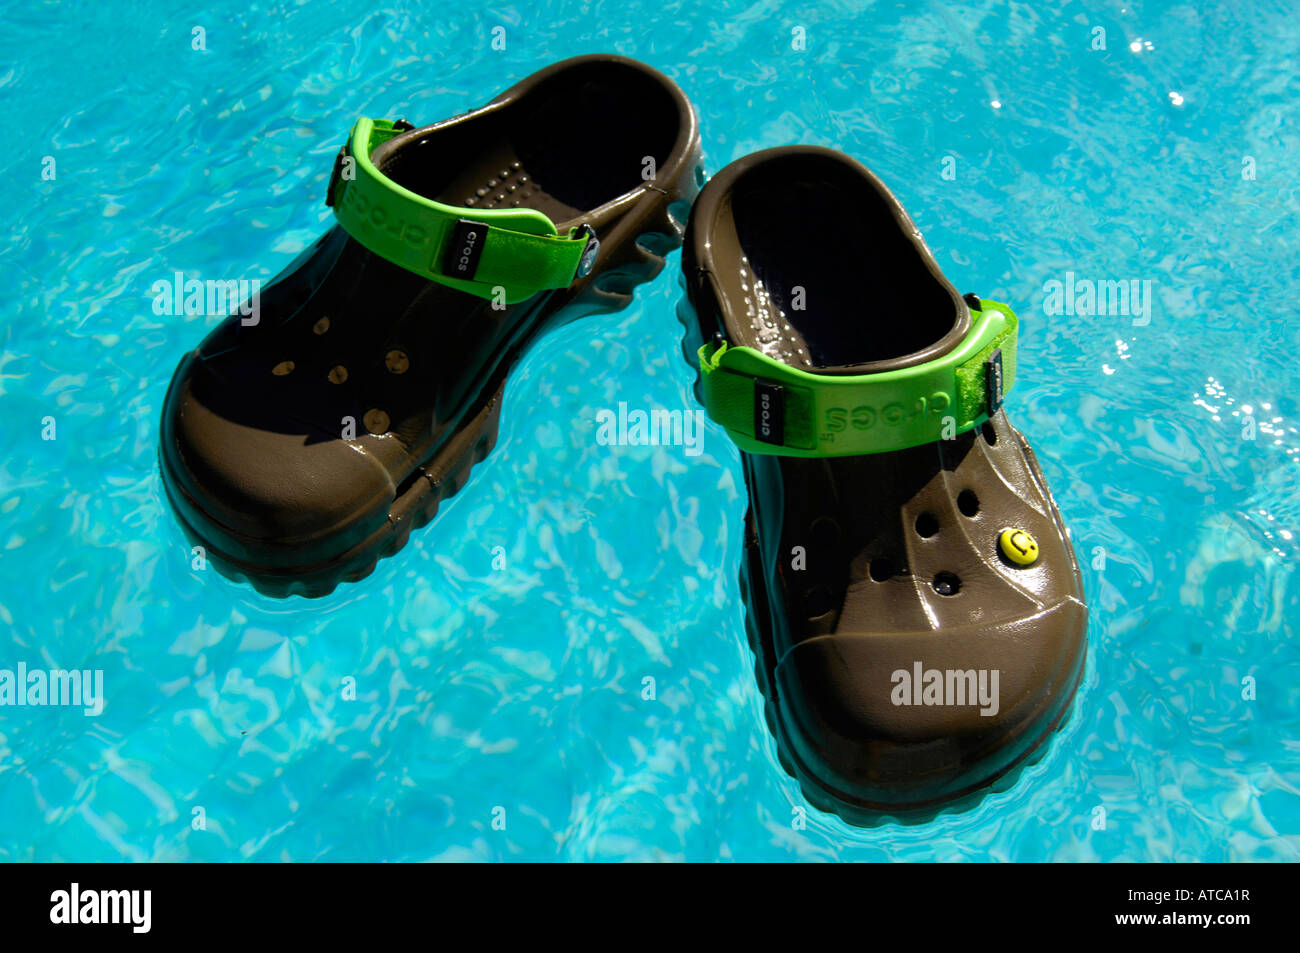 swimming pool footwear